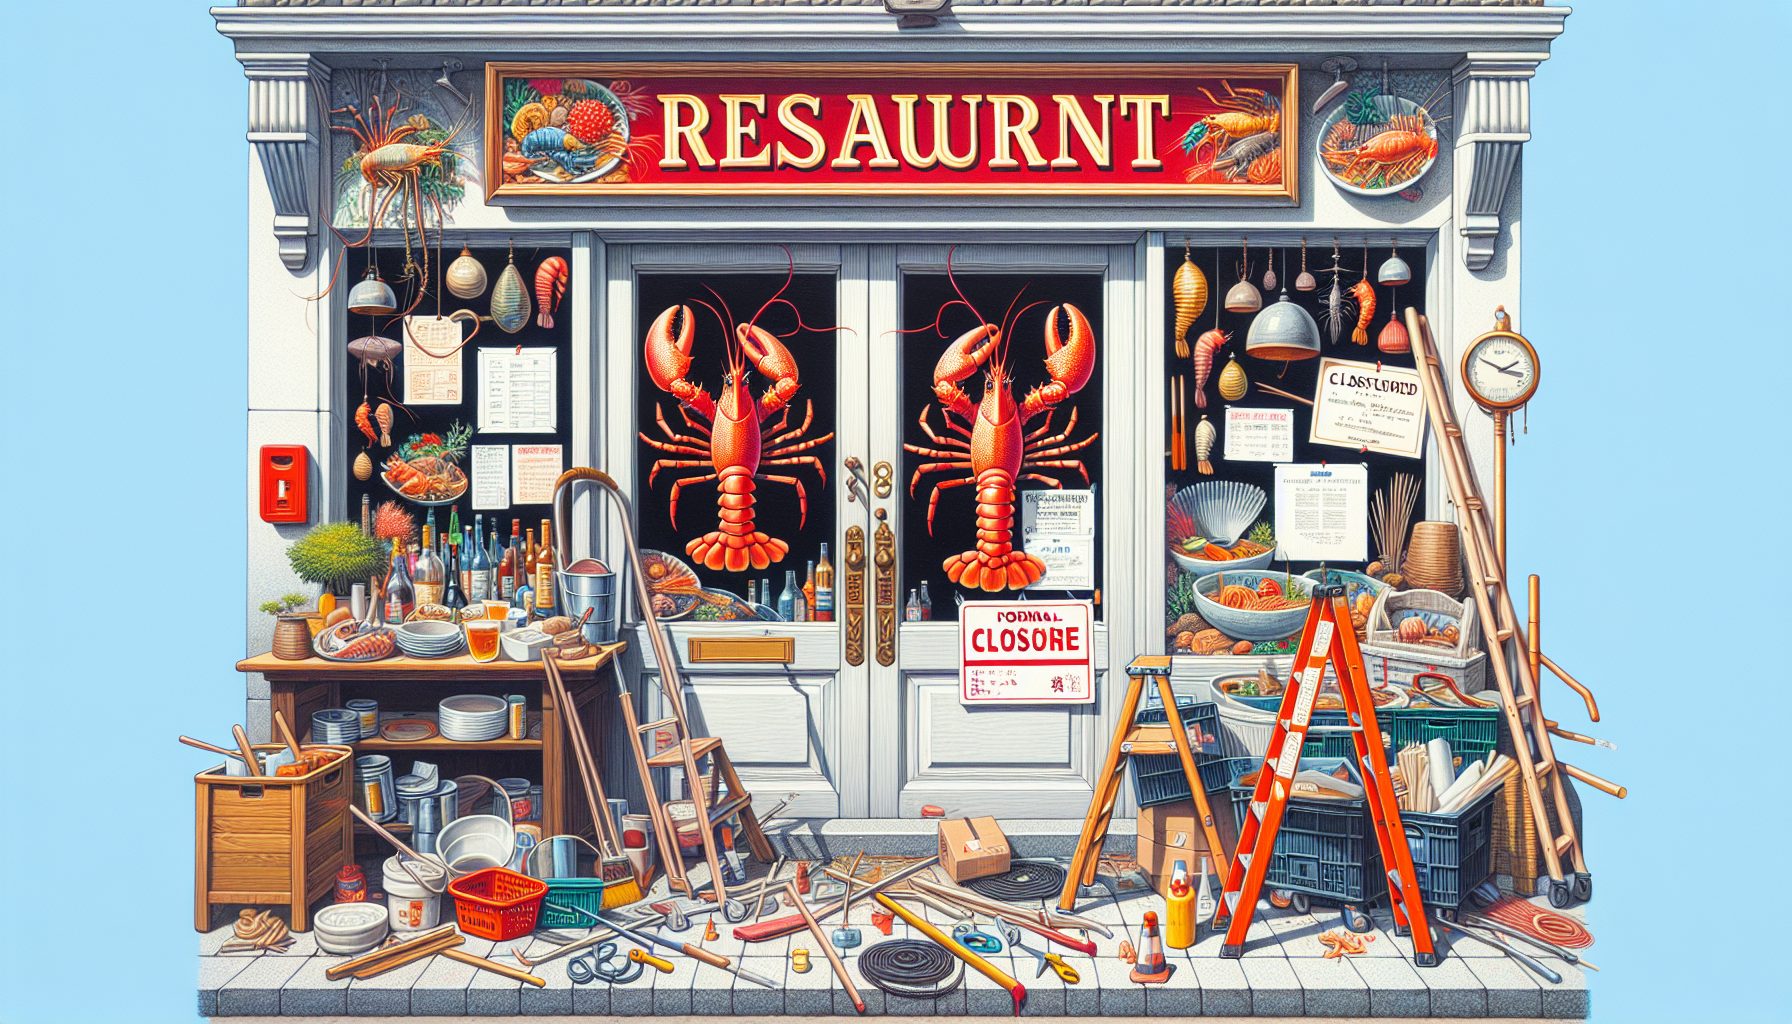 "Red Lobster Bankruptcy"